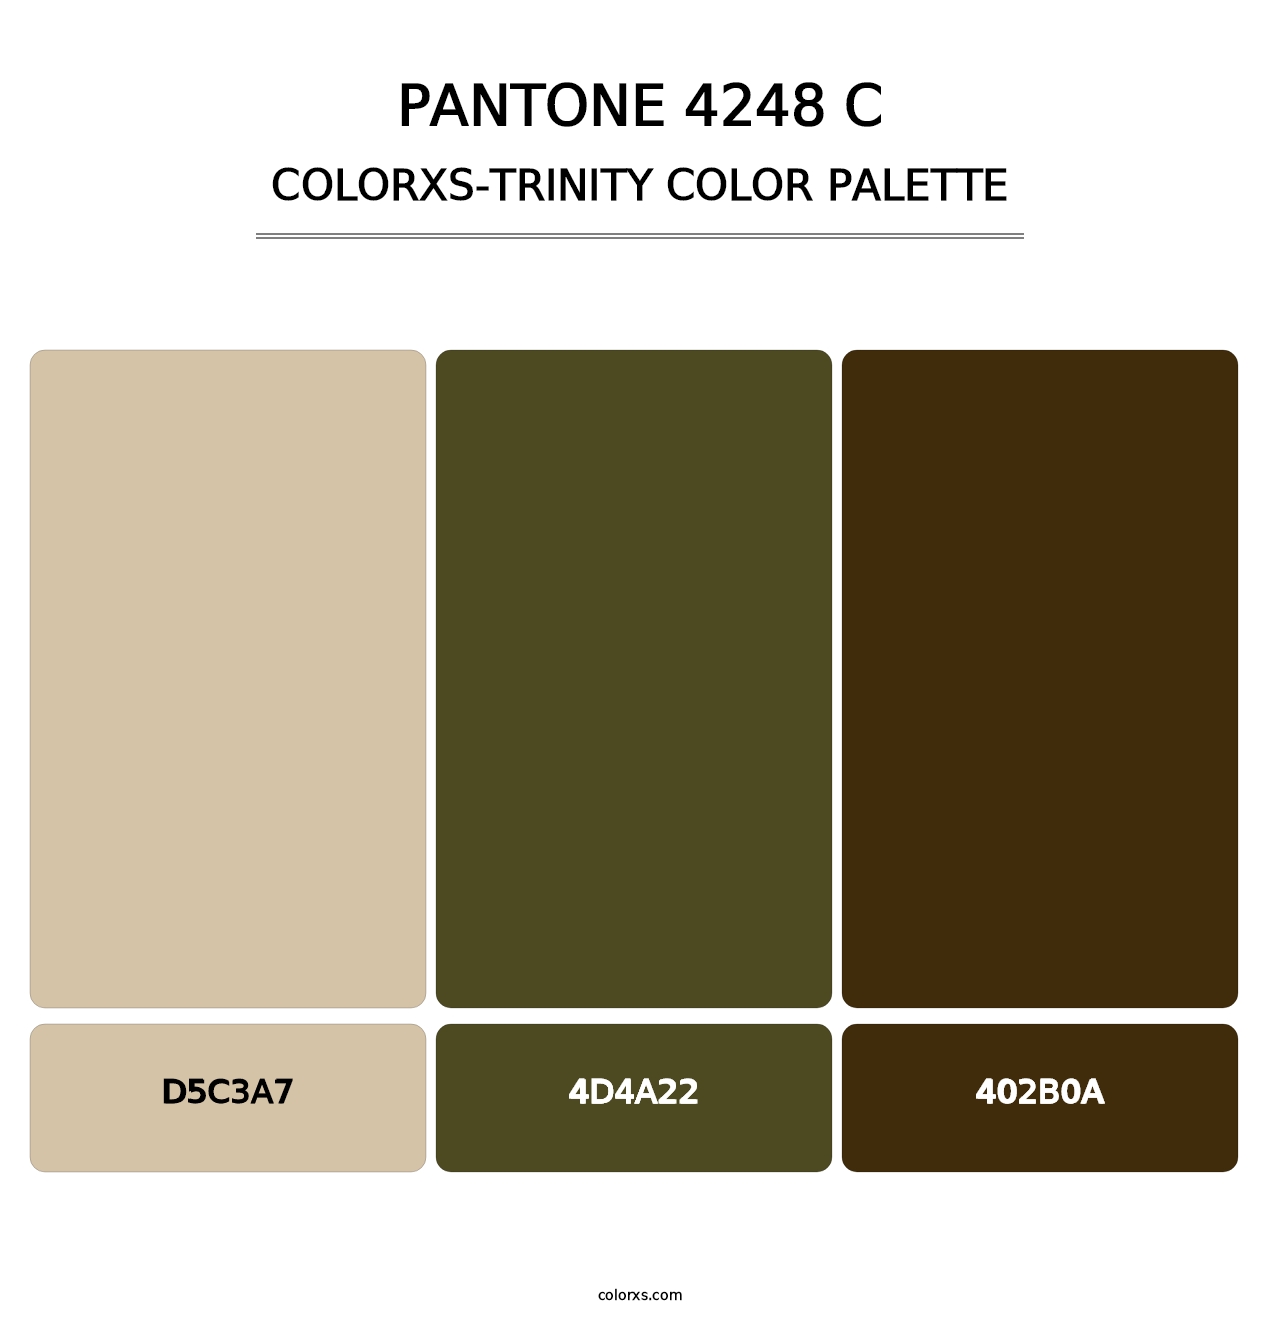 PANTONE 4248 C - Colorxs Trinity Palette